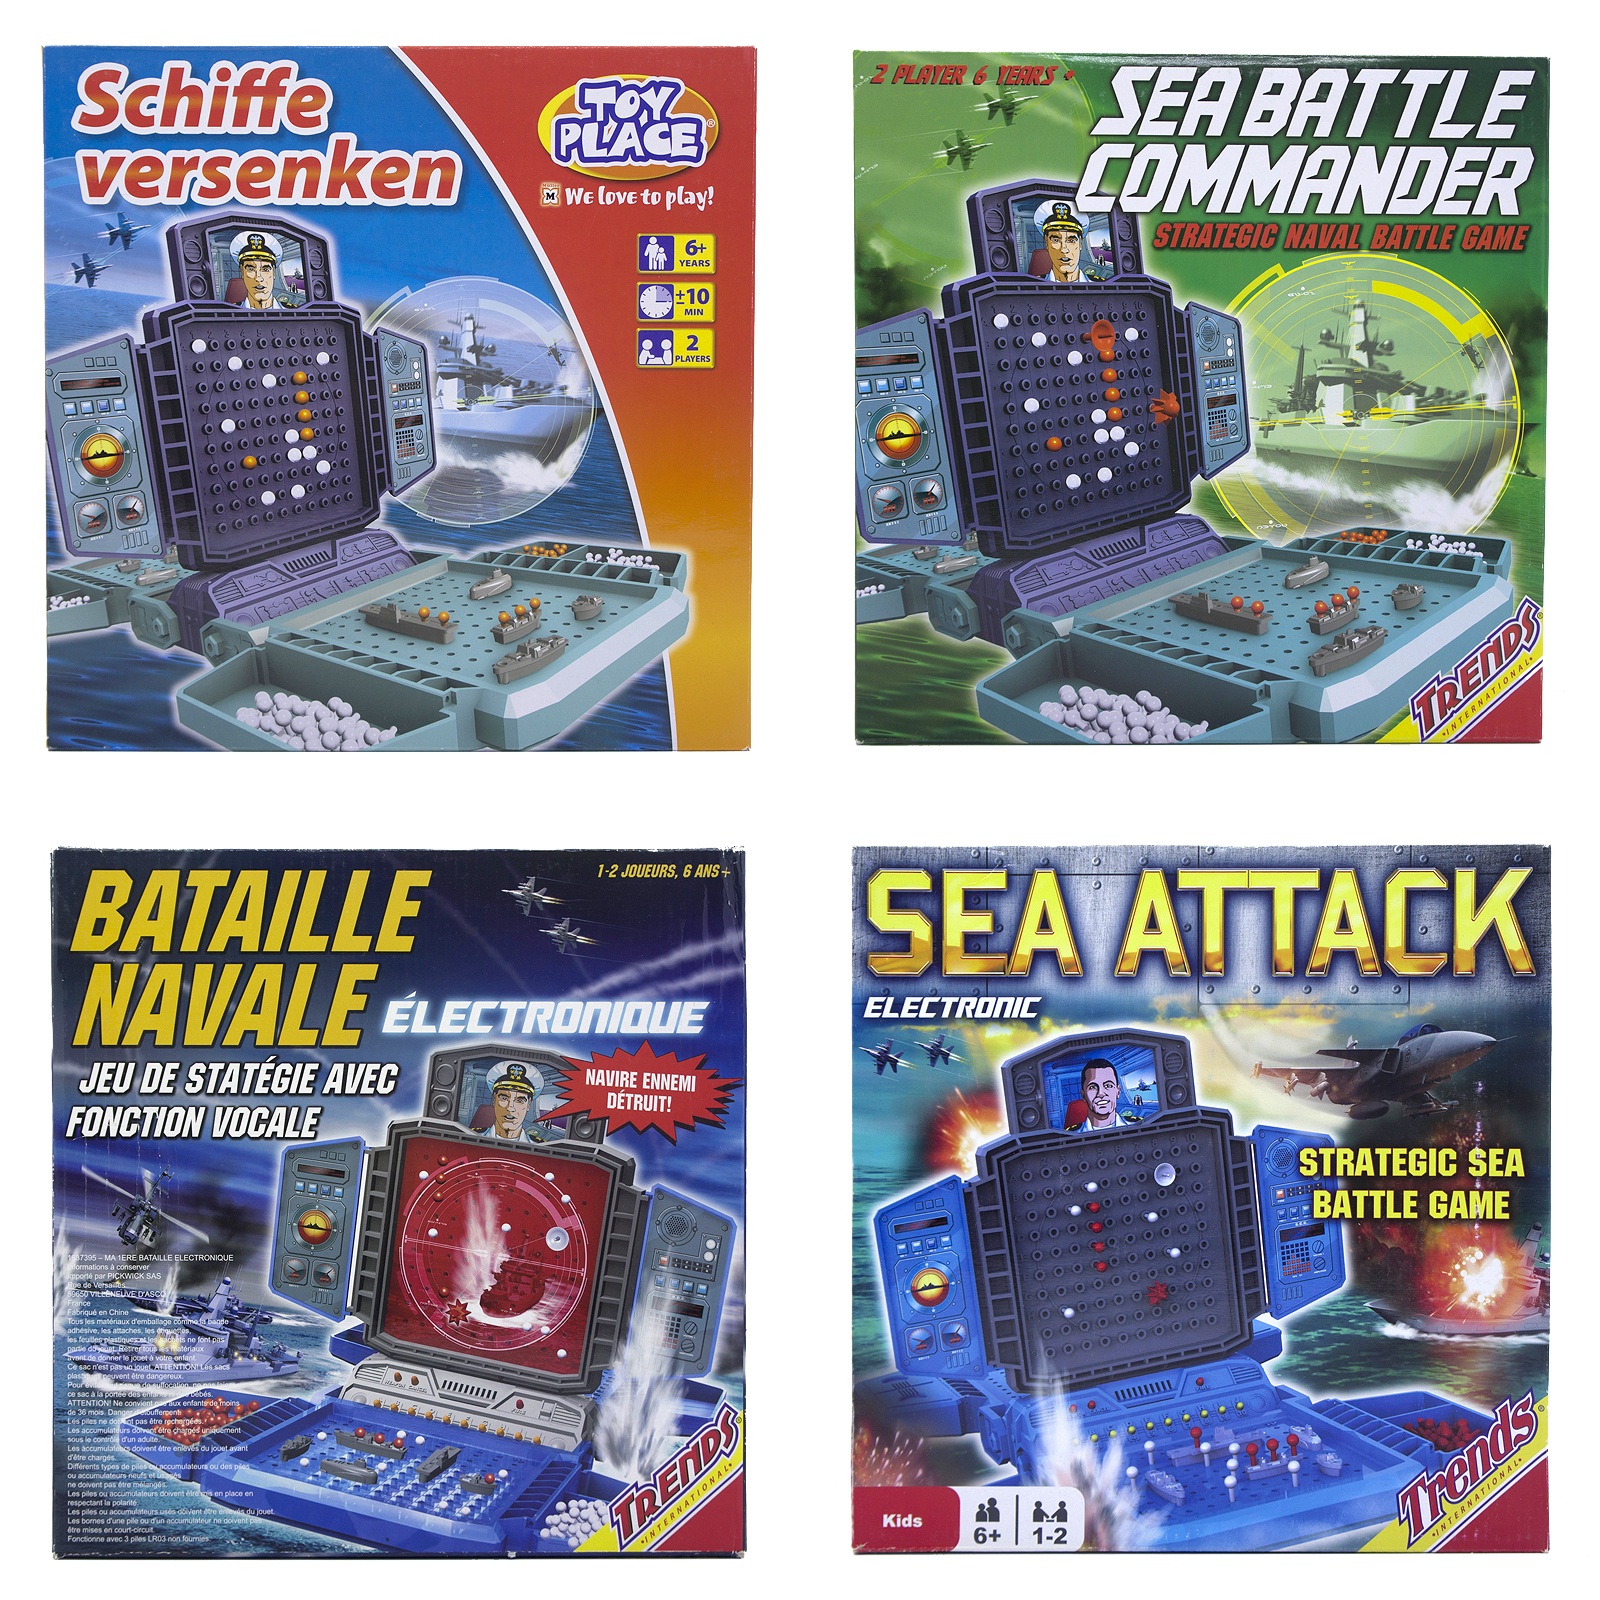 Sea Attack欧美进口桌面游戏海战棋海上战舰游戏策略对战儿童玩具